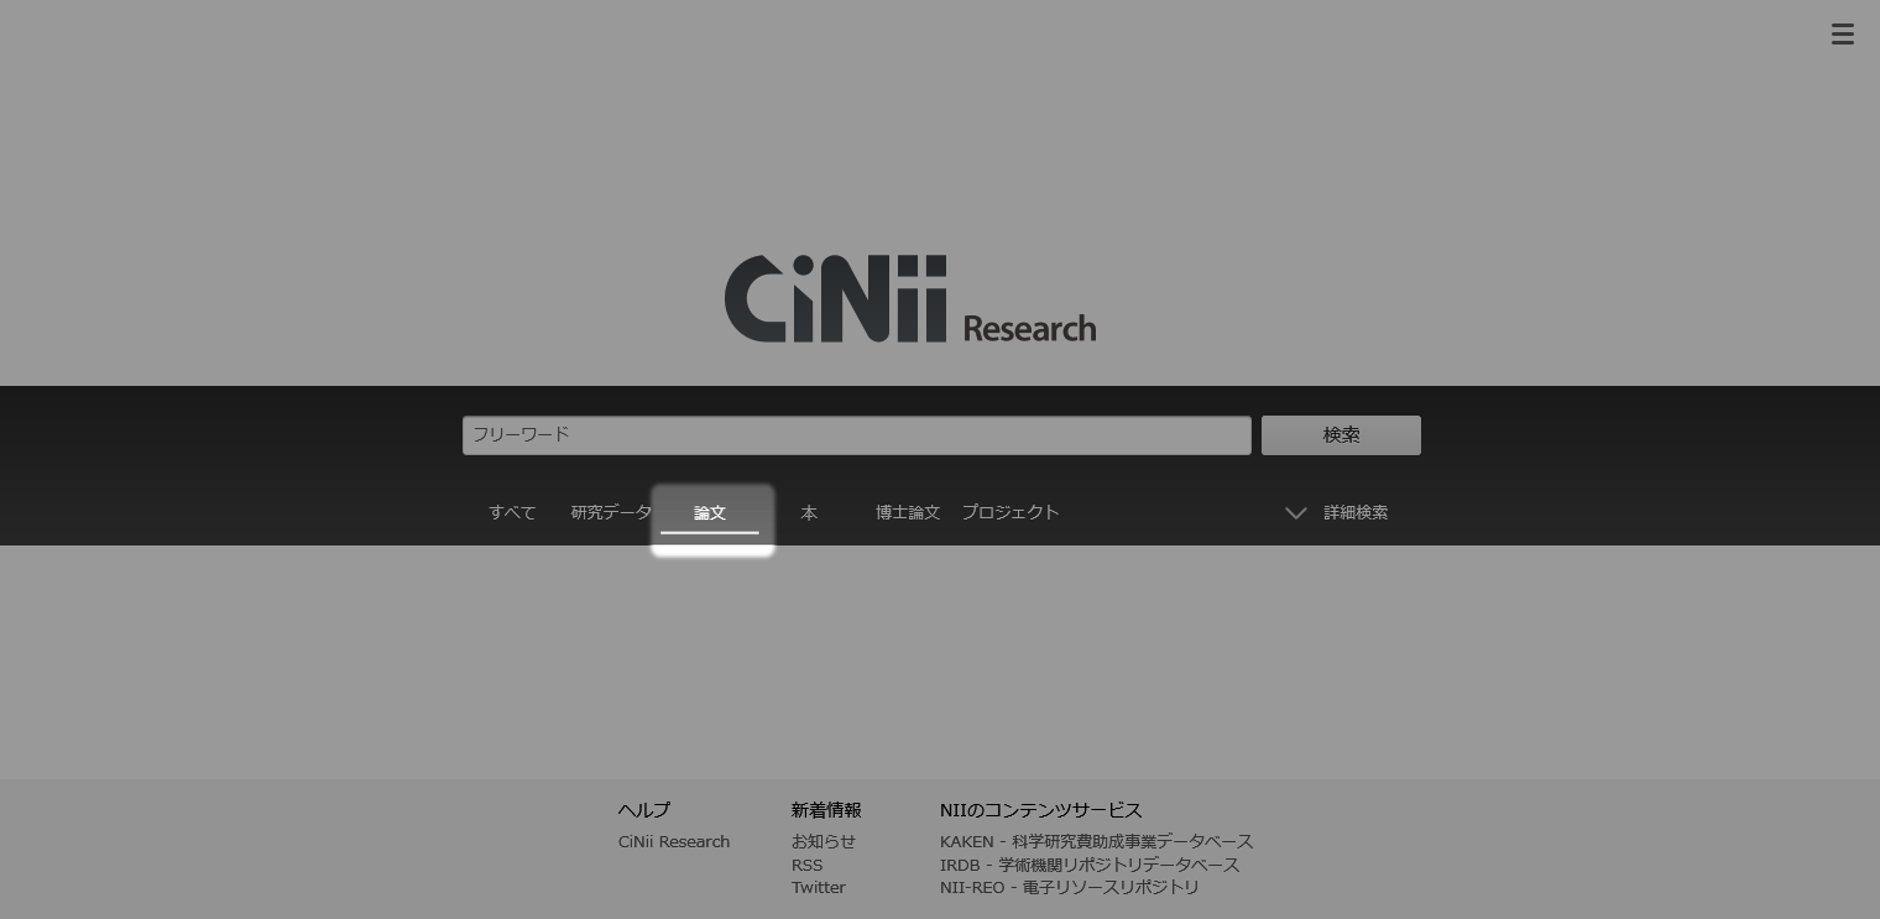 CiNii Articles詳細検索画面